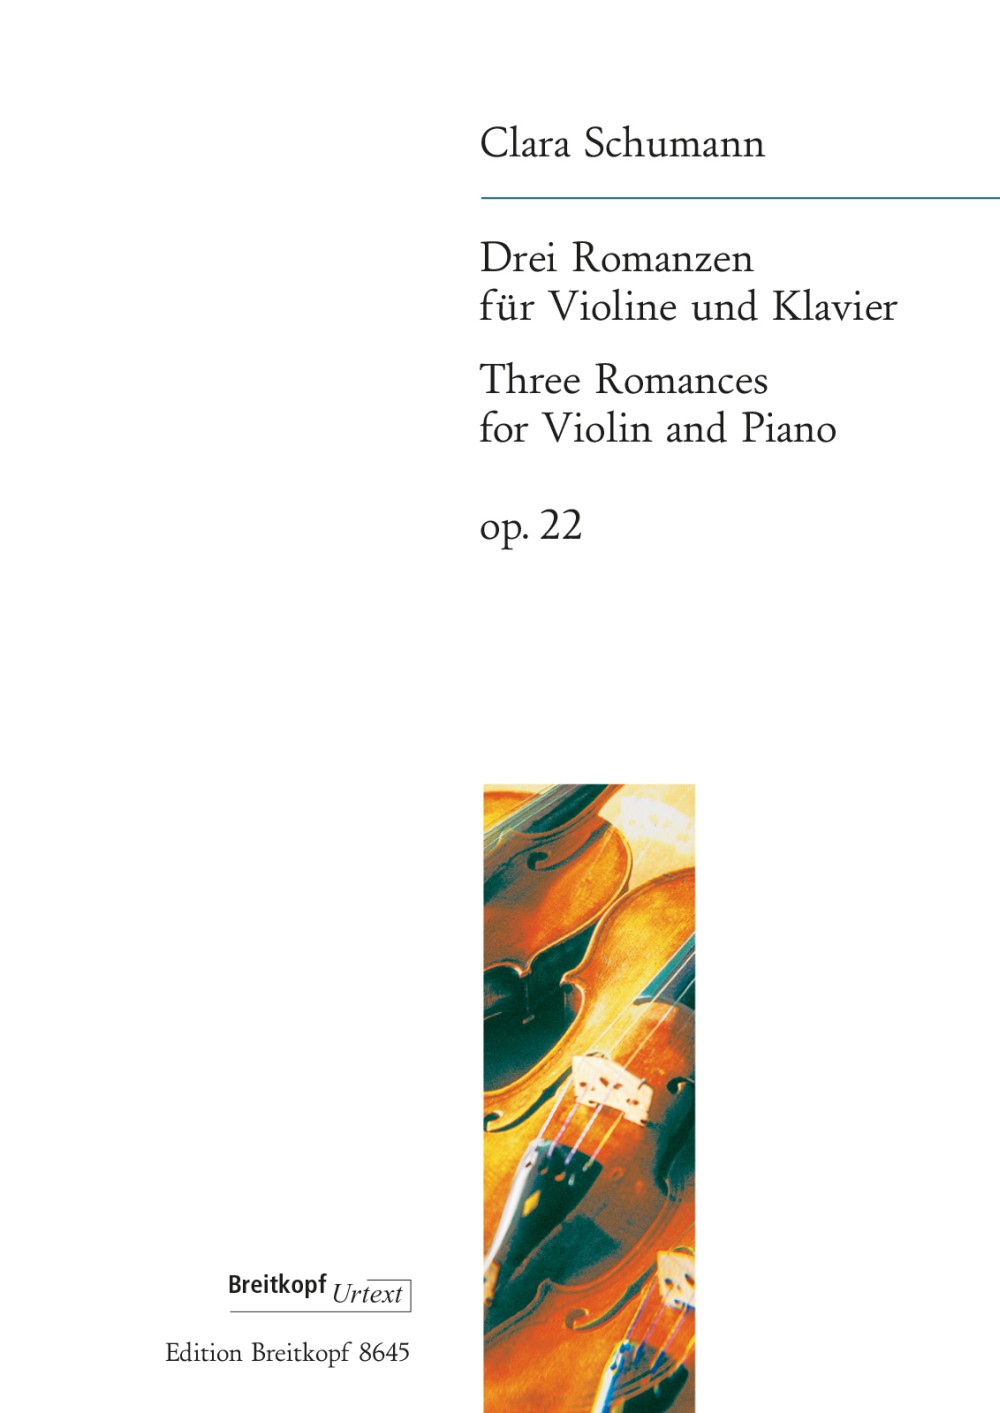 Clara Schumann 3 Romances, Op. 22 (for Violin and Piano)